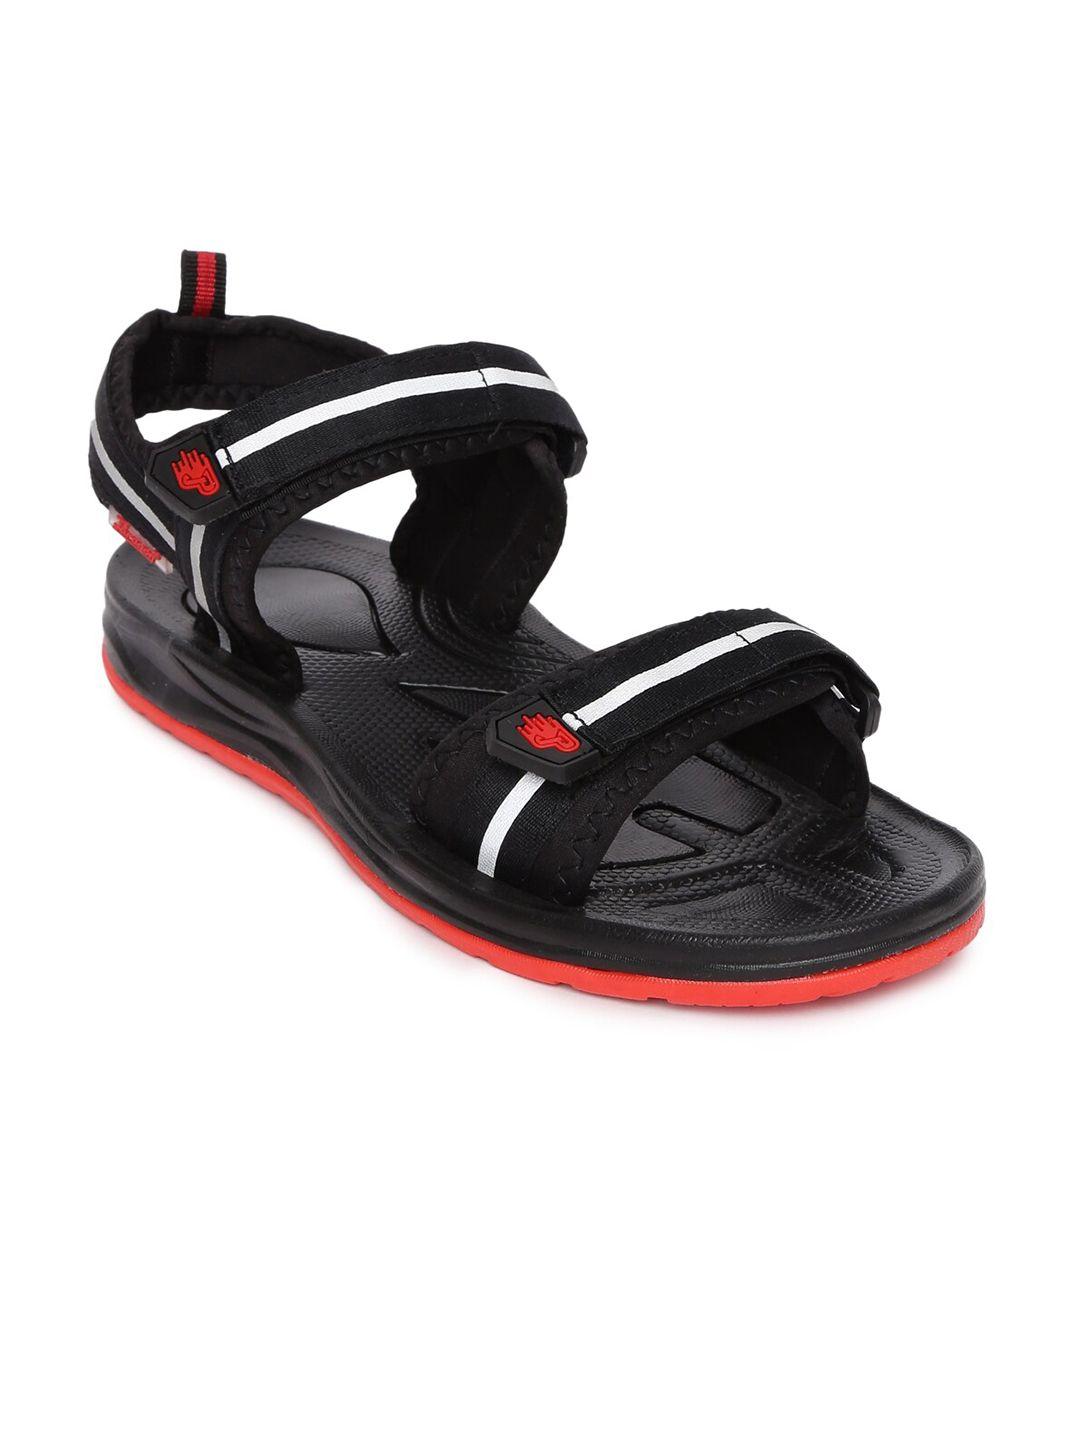 paragon-men-black-&-red-comfort-sandals